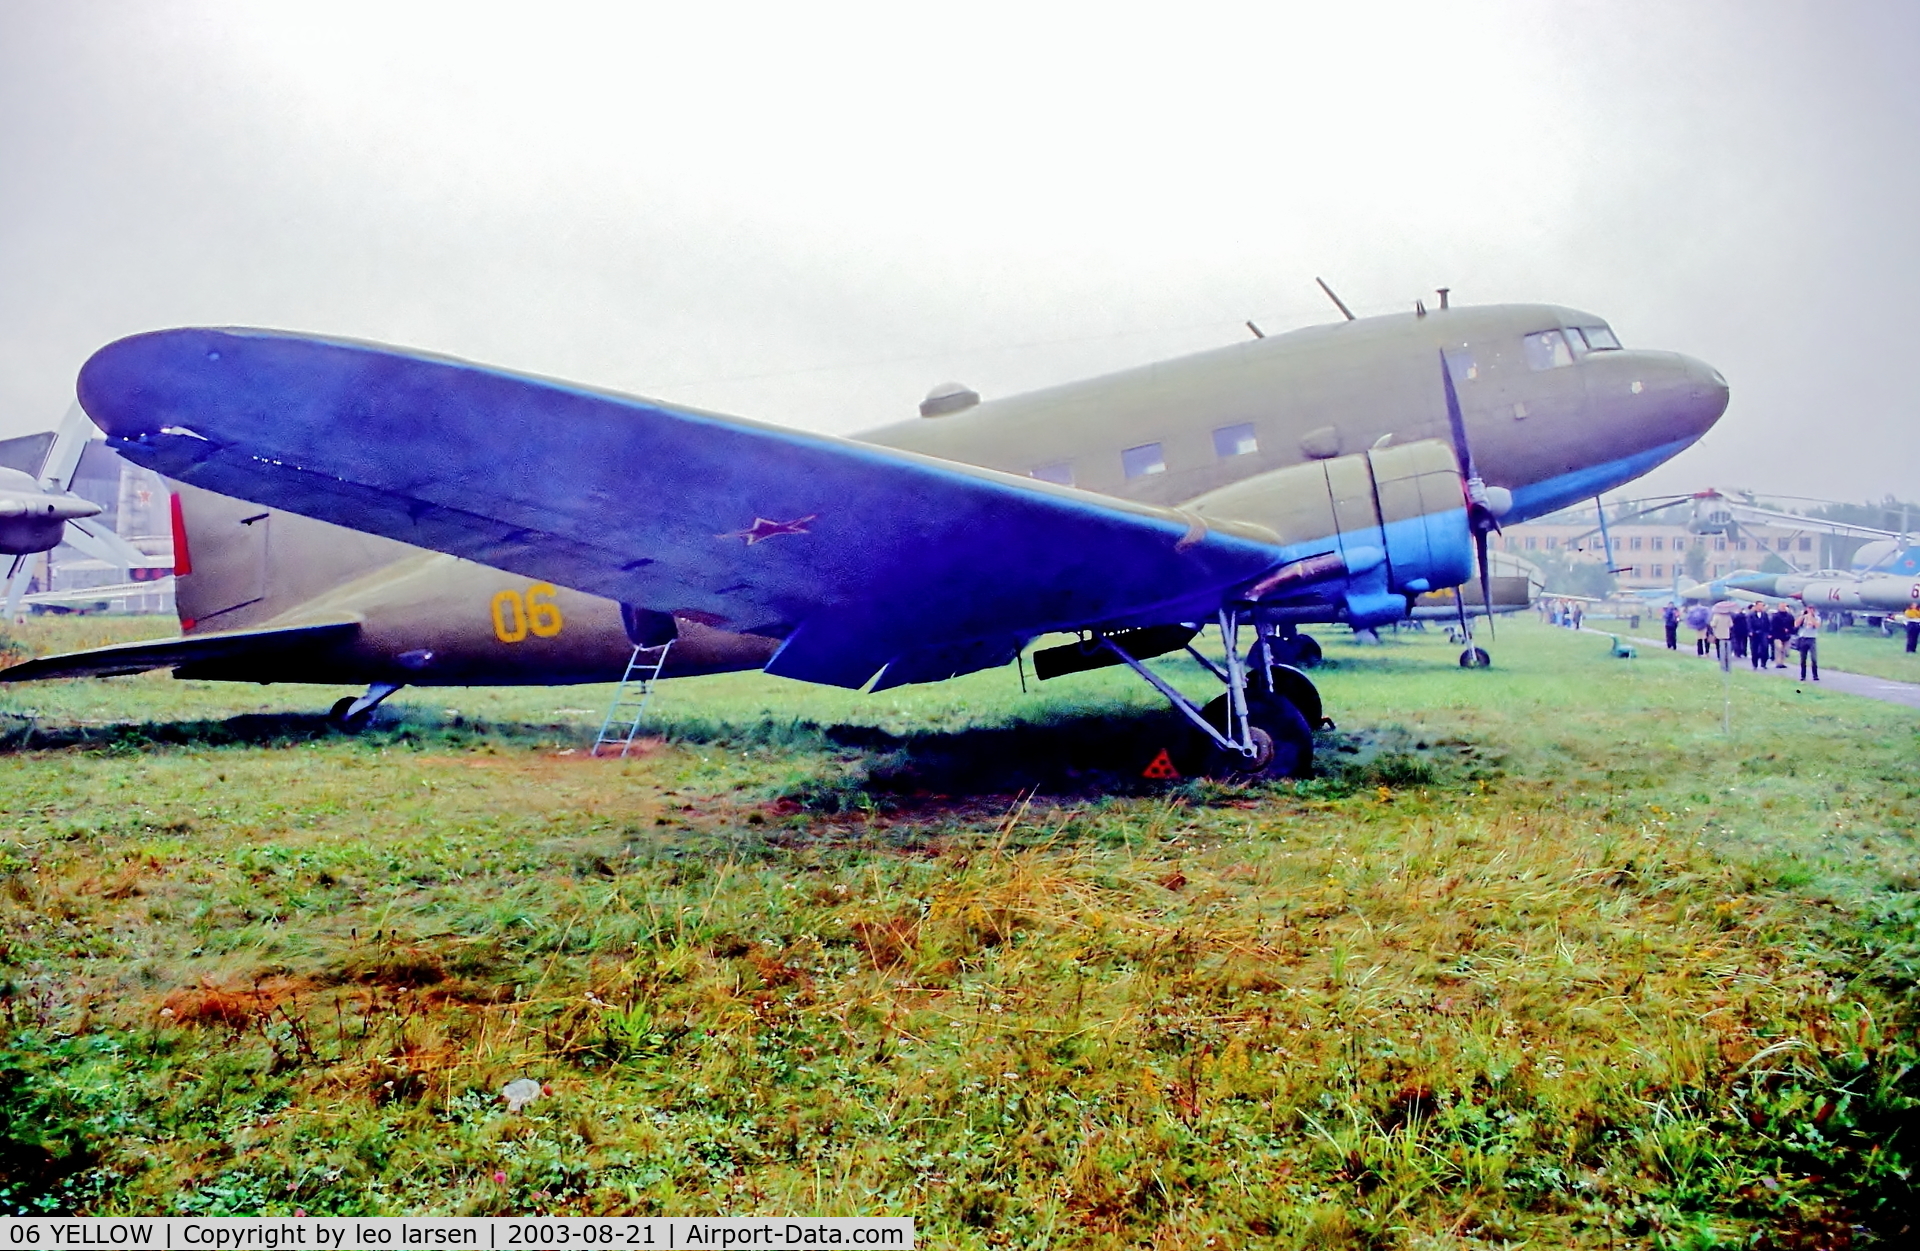 06 YELLOW, 1948 Lisunov Li-2T C/N 184 188 09, Monino Air Museum 21.8.2003